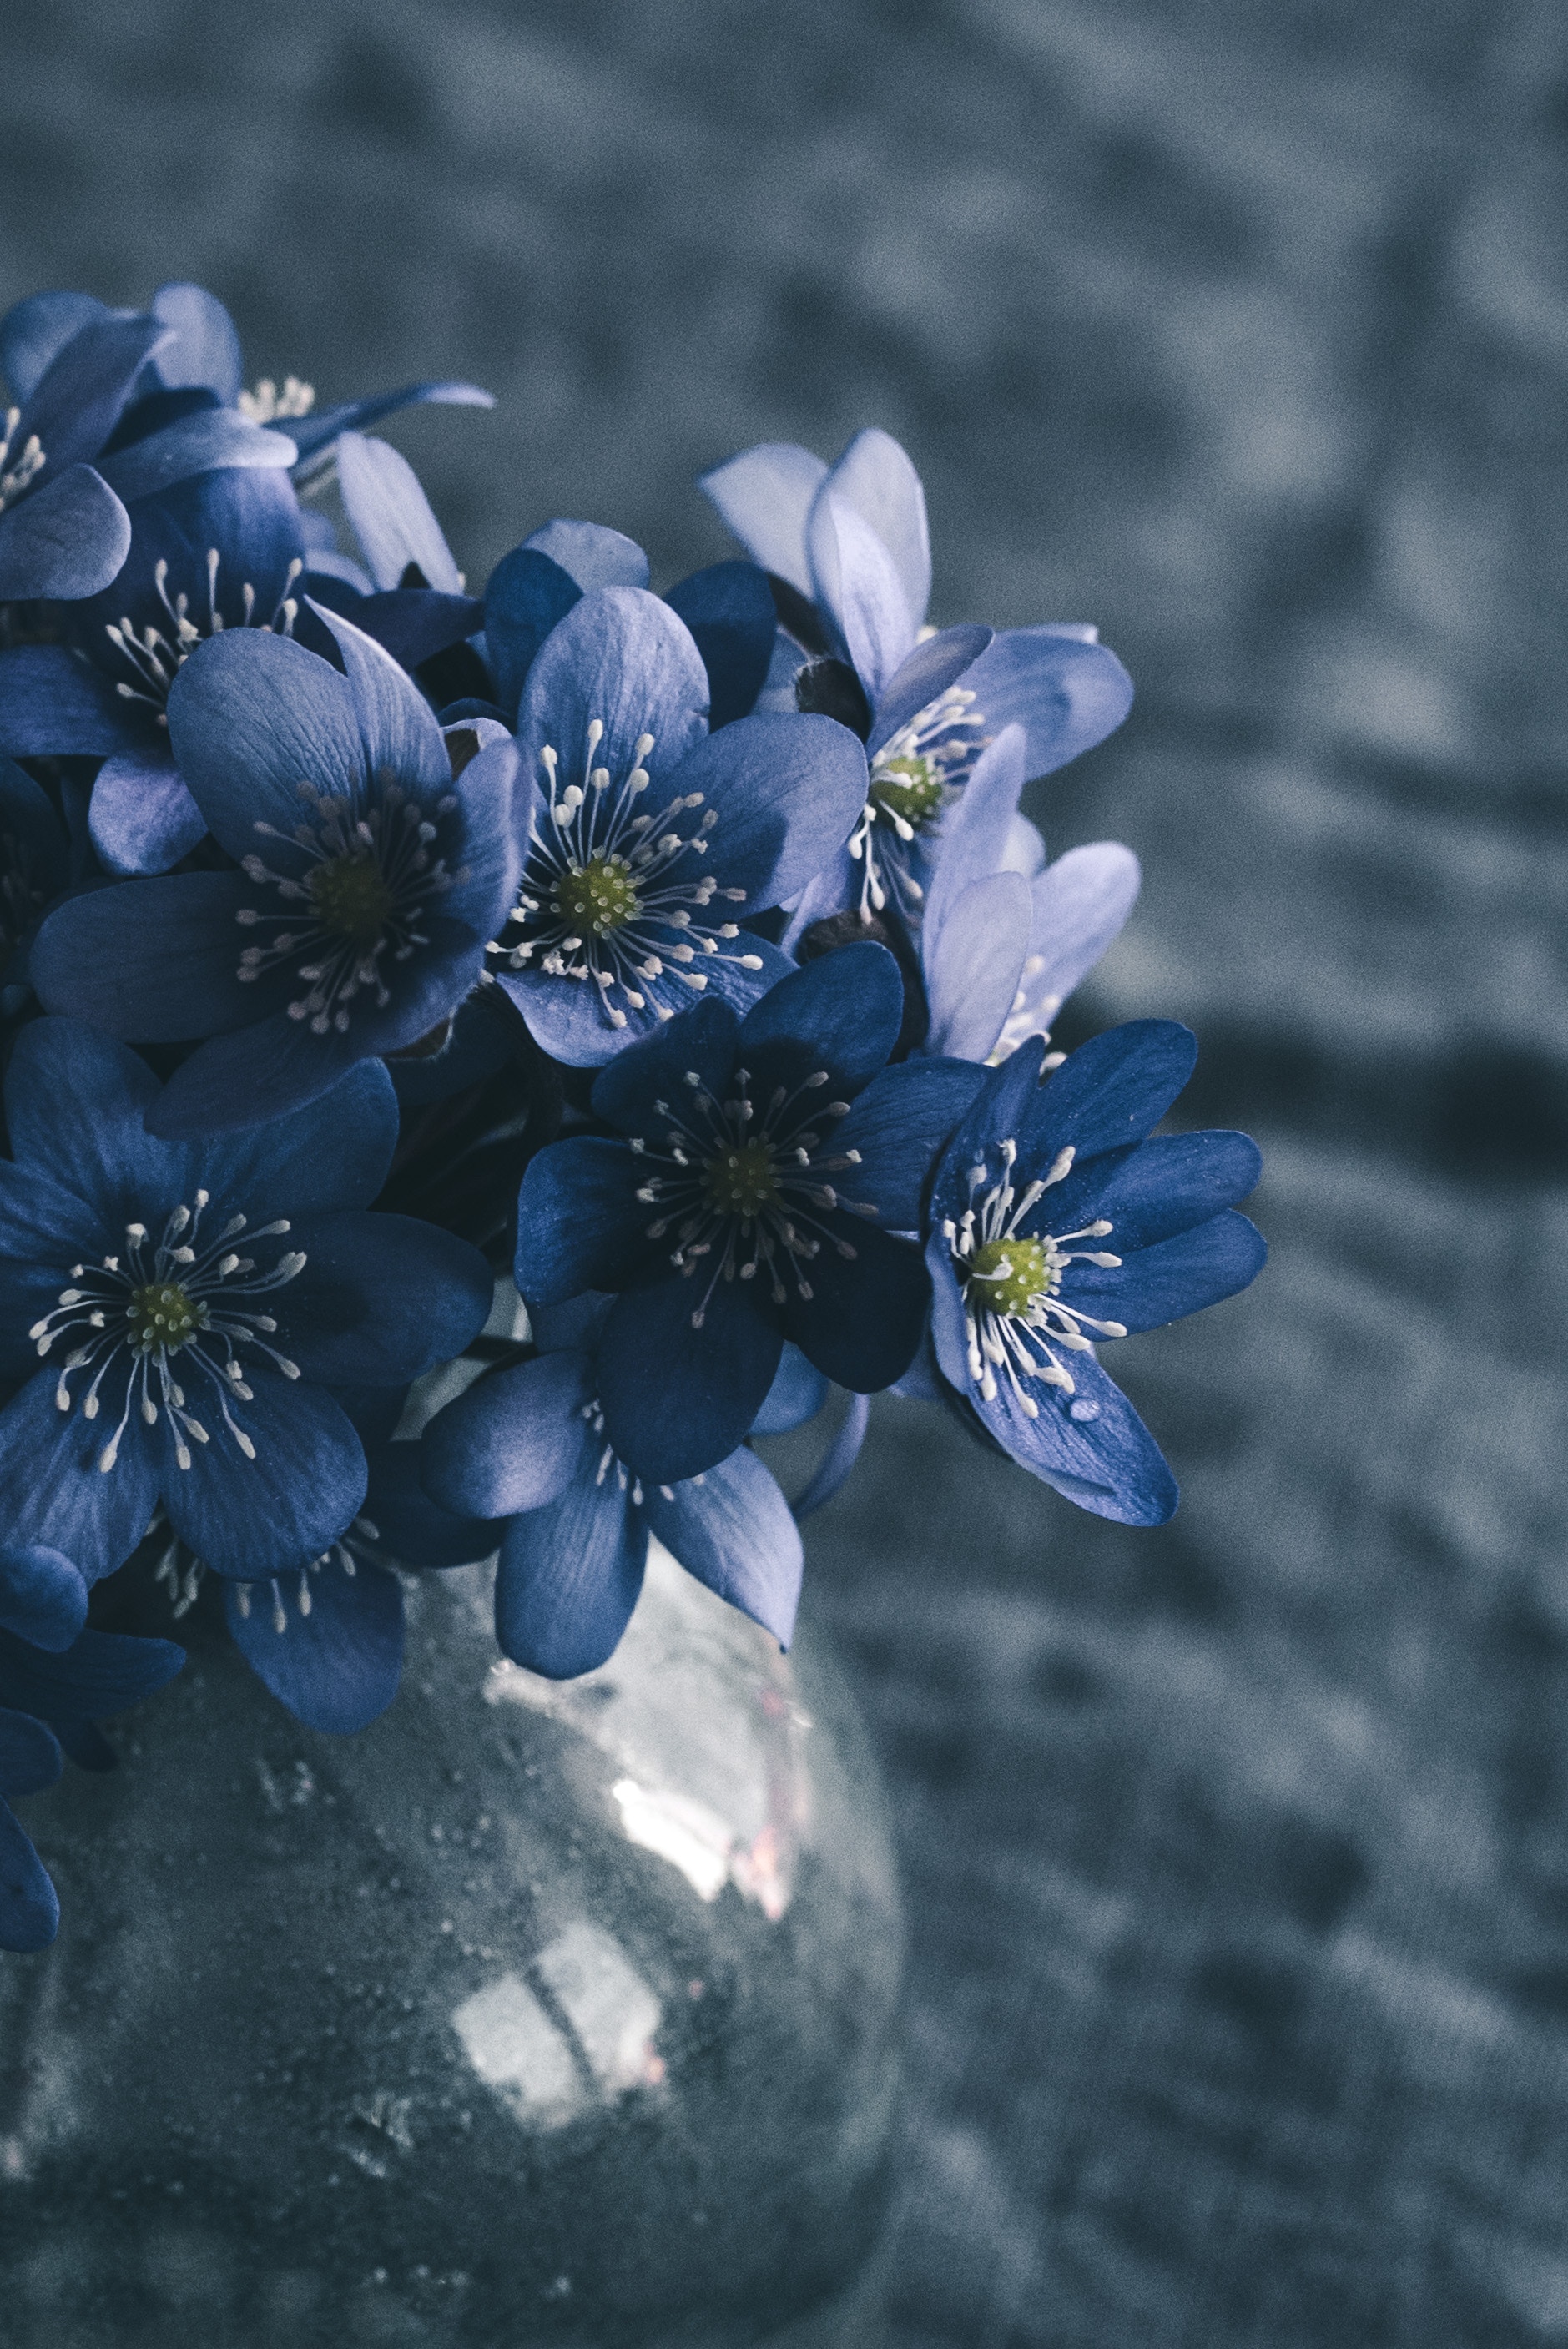 Flower phone wallpaper background aesthetic  Premium Photo  rawpixel